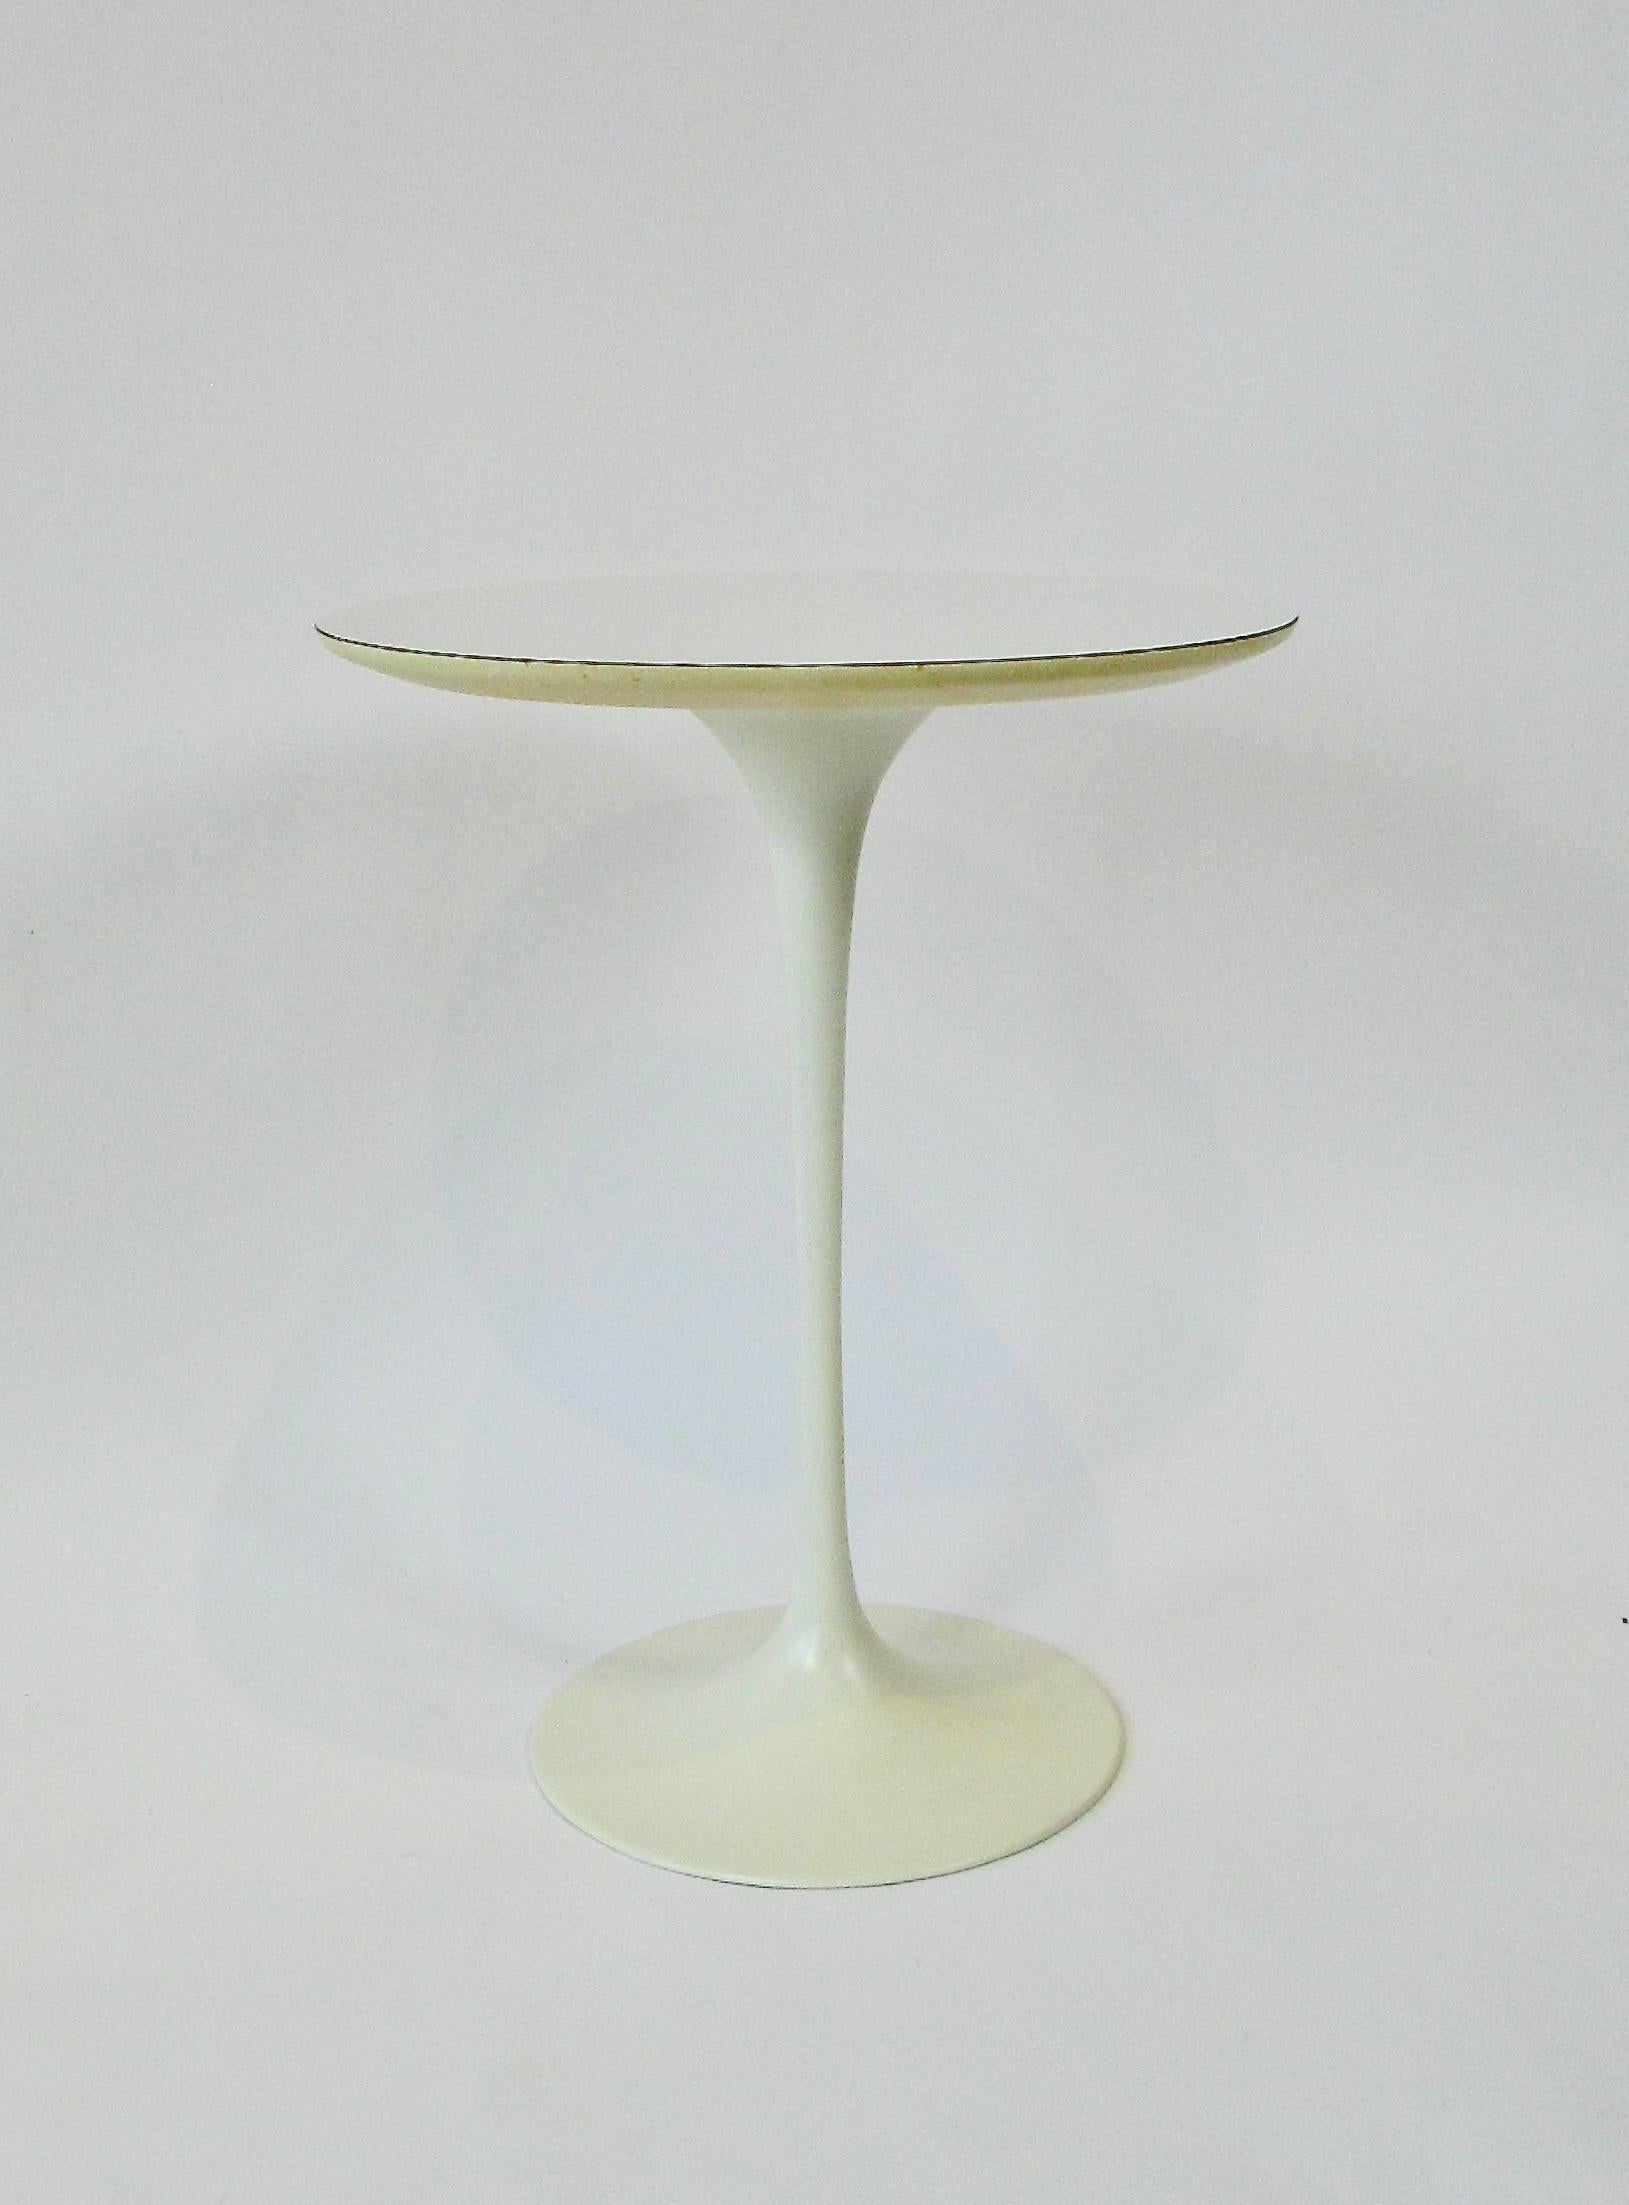 American Eero Saarinen for Knoll Tulip Group Side Table